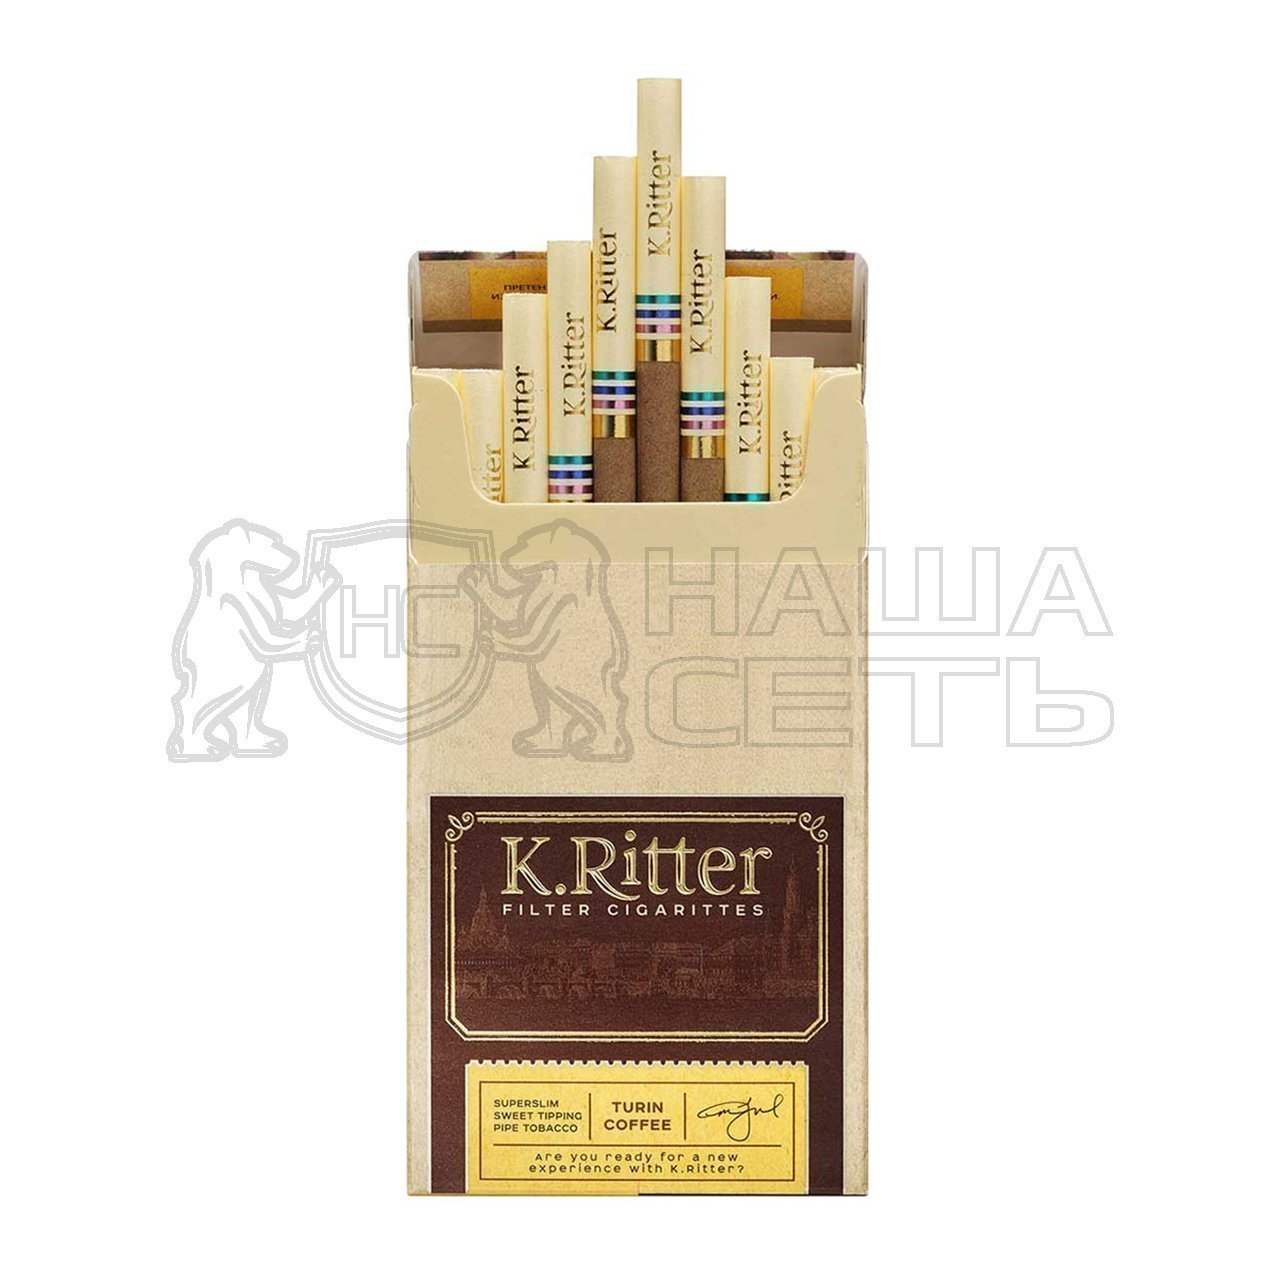 Ritter сигареты купить. K Ritter Compact сигареты. Сигариты с фильтром "k.Ritter". Сигареты к.Риттер компакт вишня (20). K. Ritter сигареты супер слим.